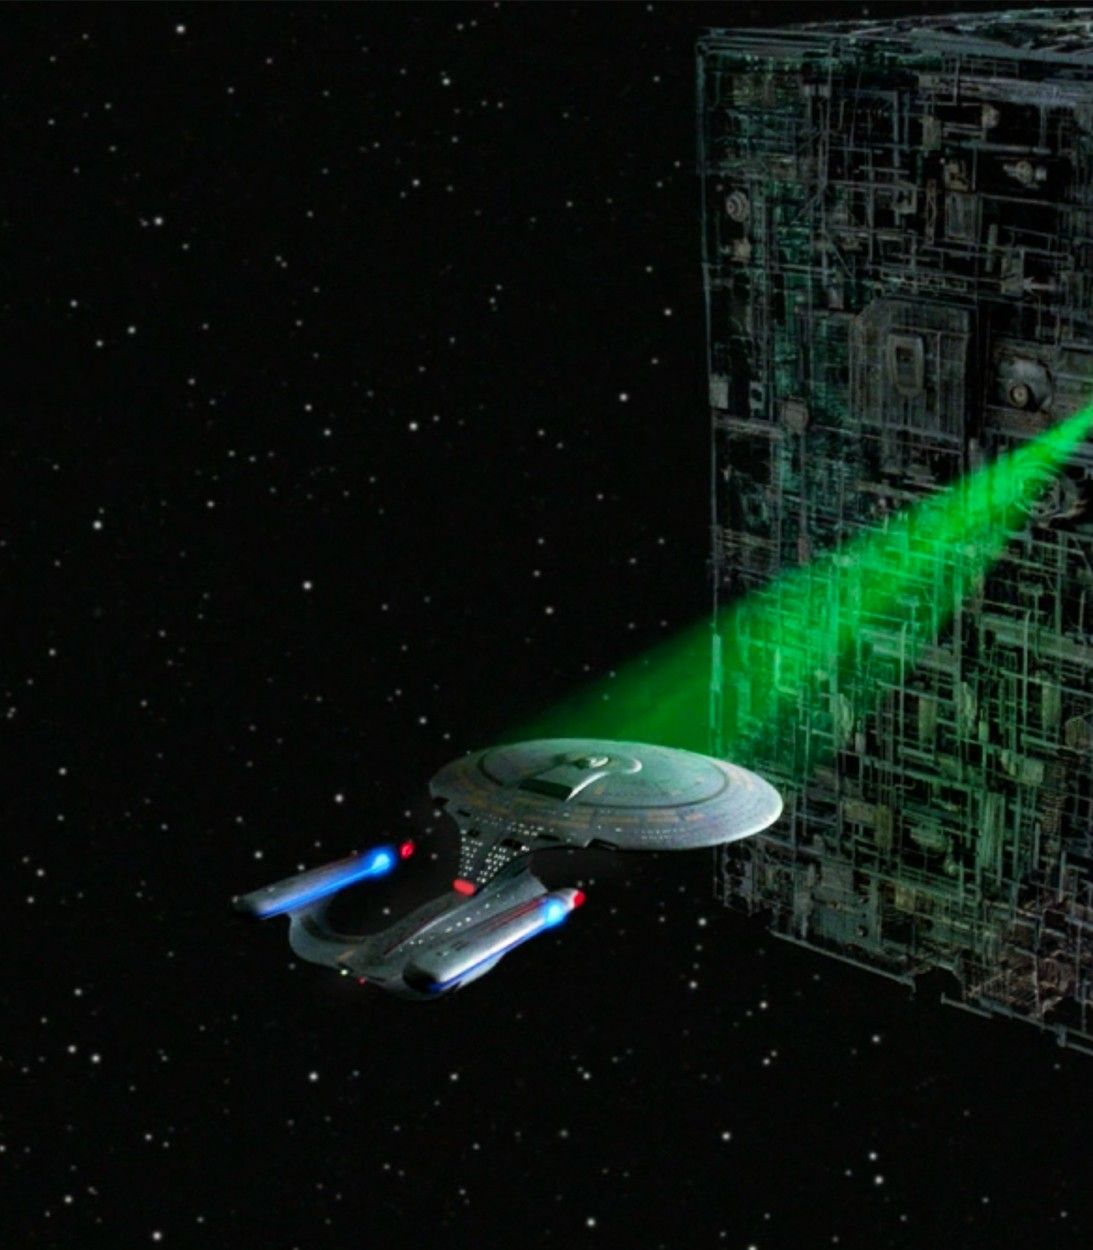 Enterprise vs Borg Cube vertical